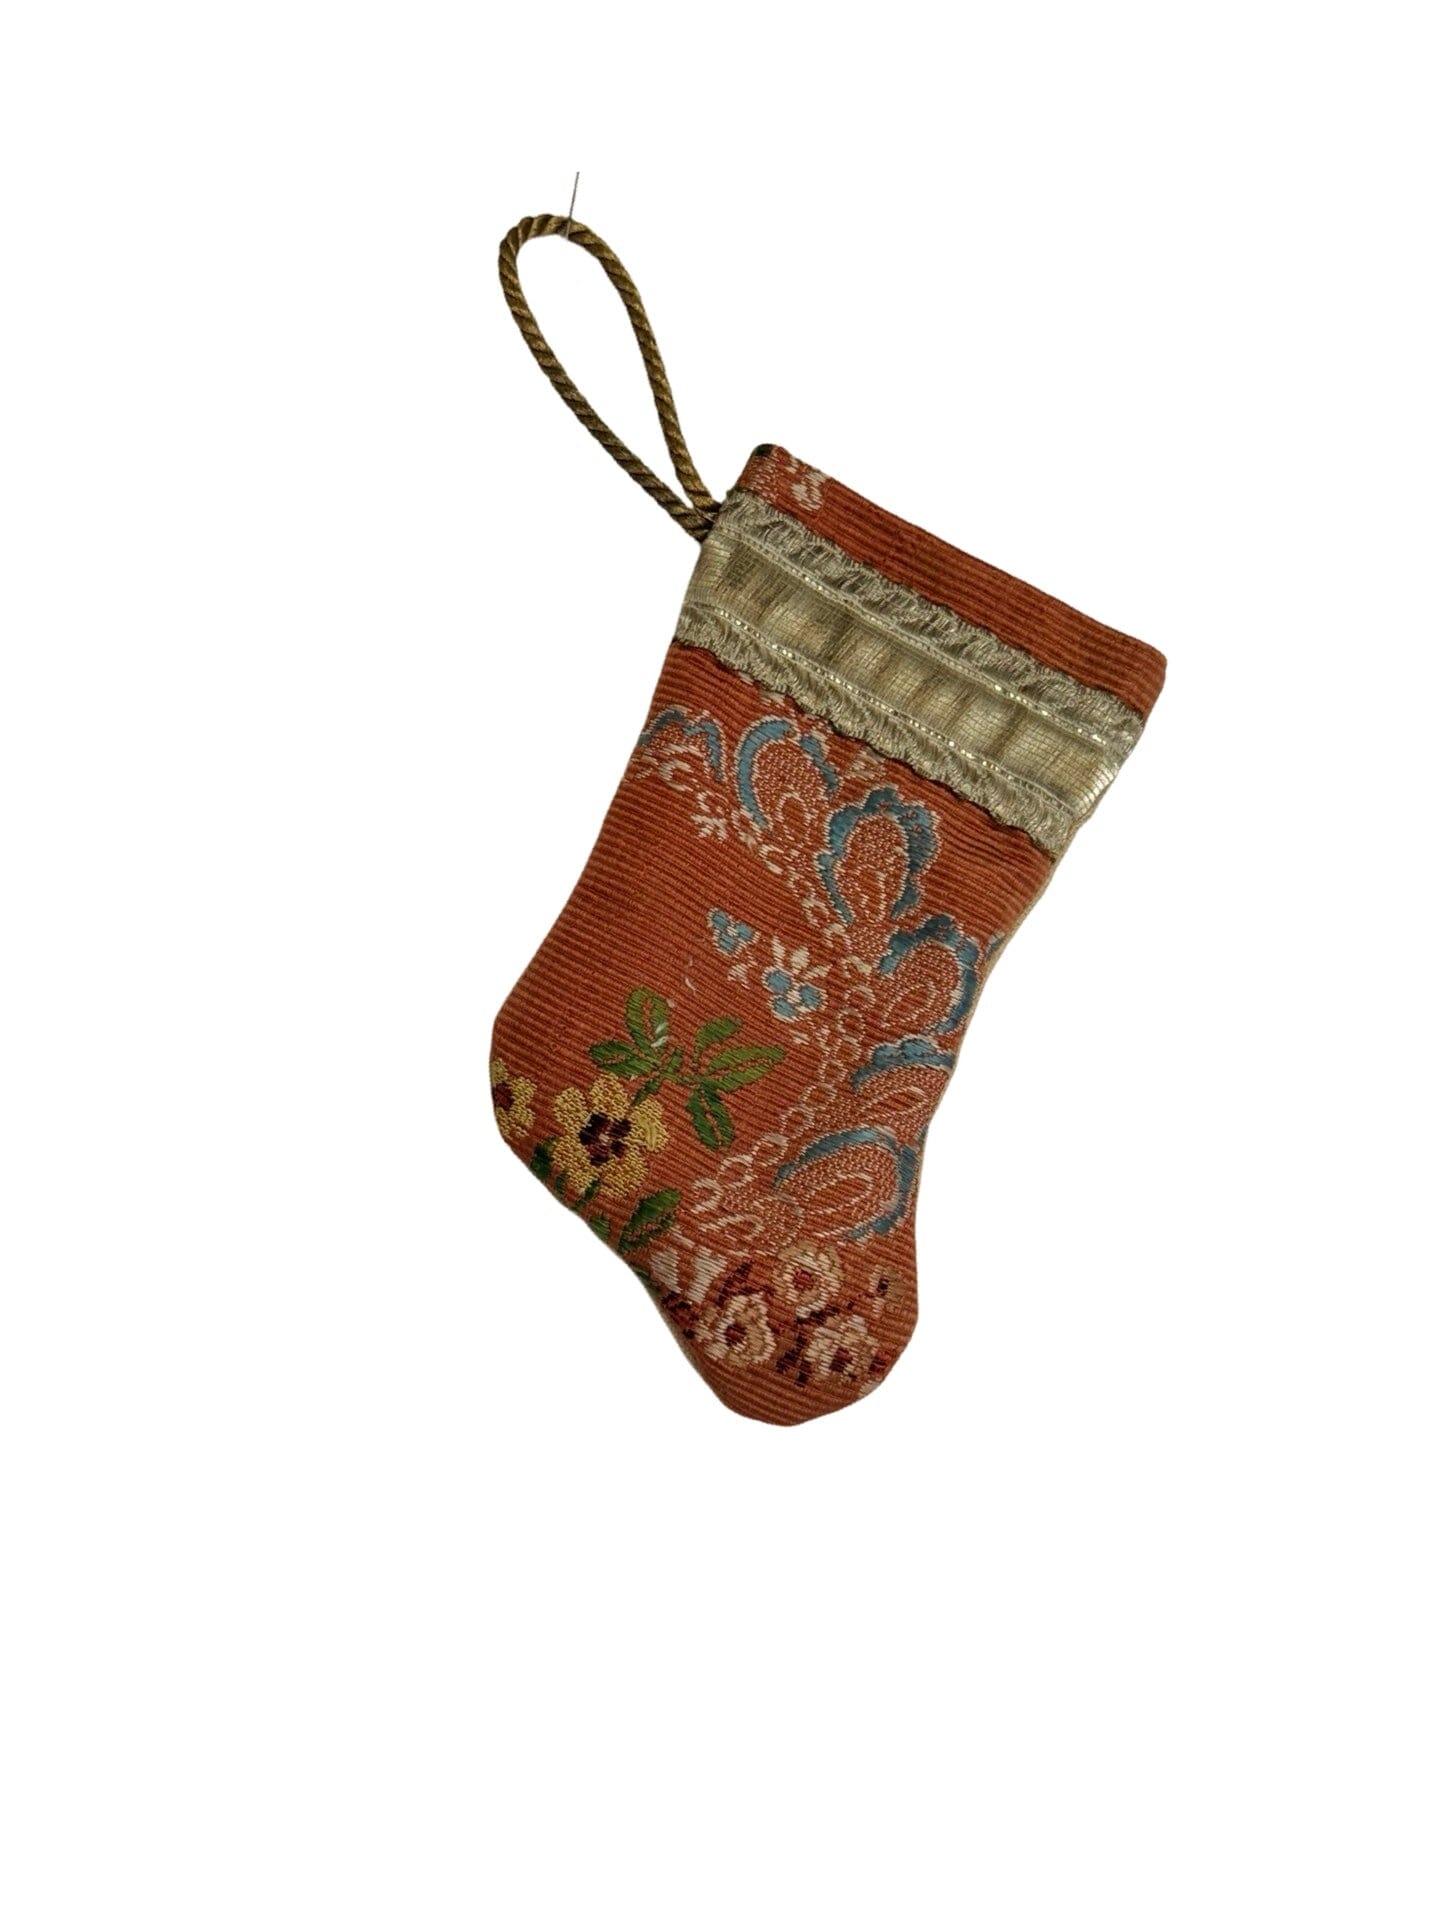 Handmade Mini Stocking Made From Vintage Fabric and Trims- Bronze Rose Floral Ornament B. Viz Design H 